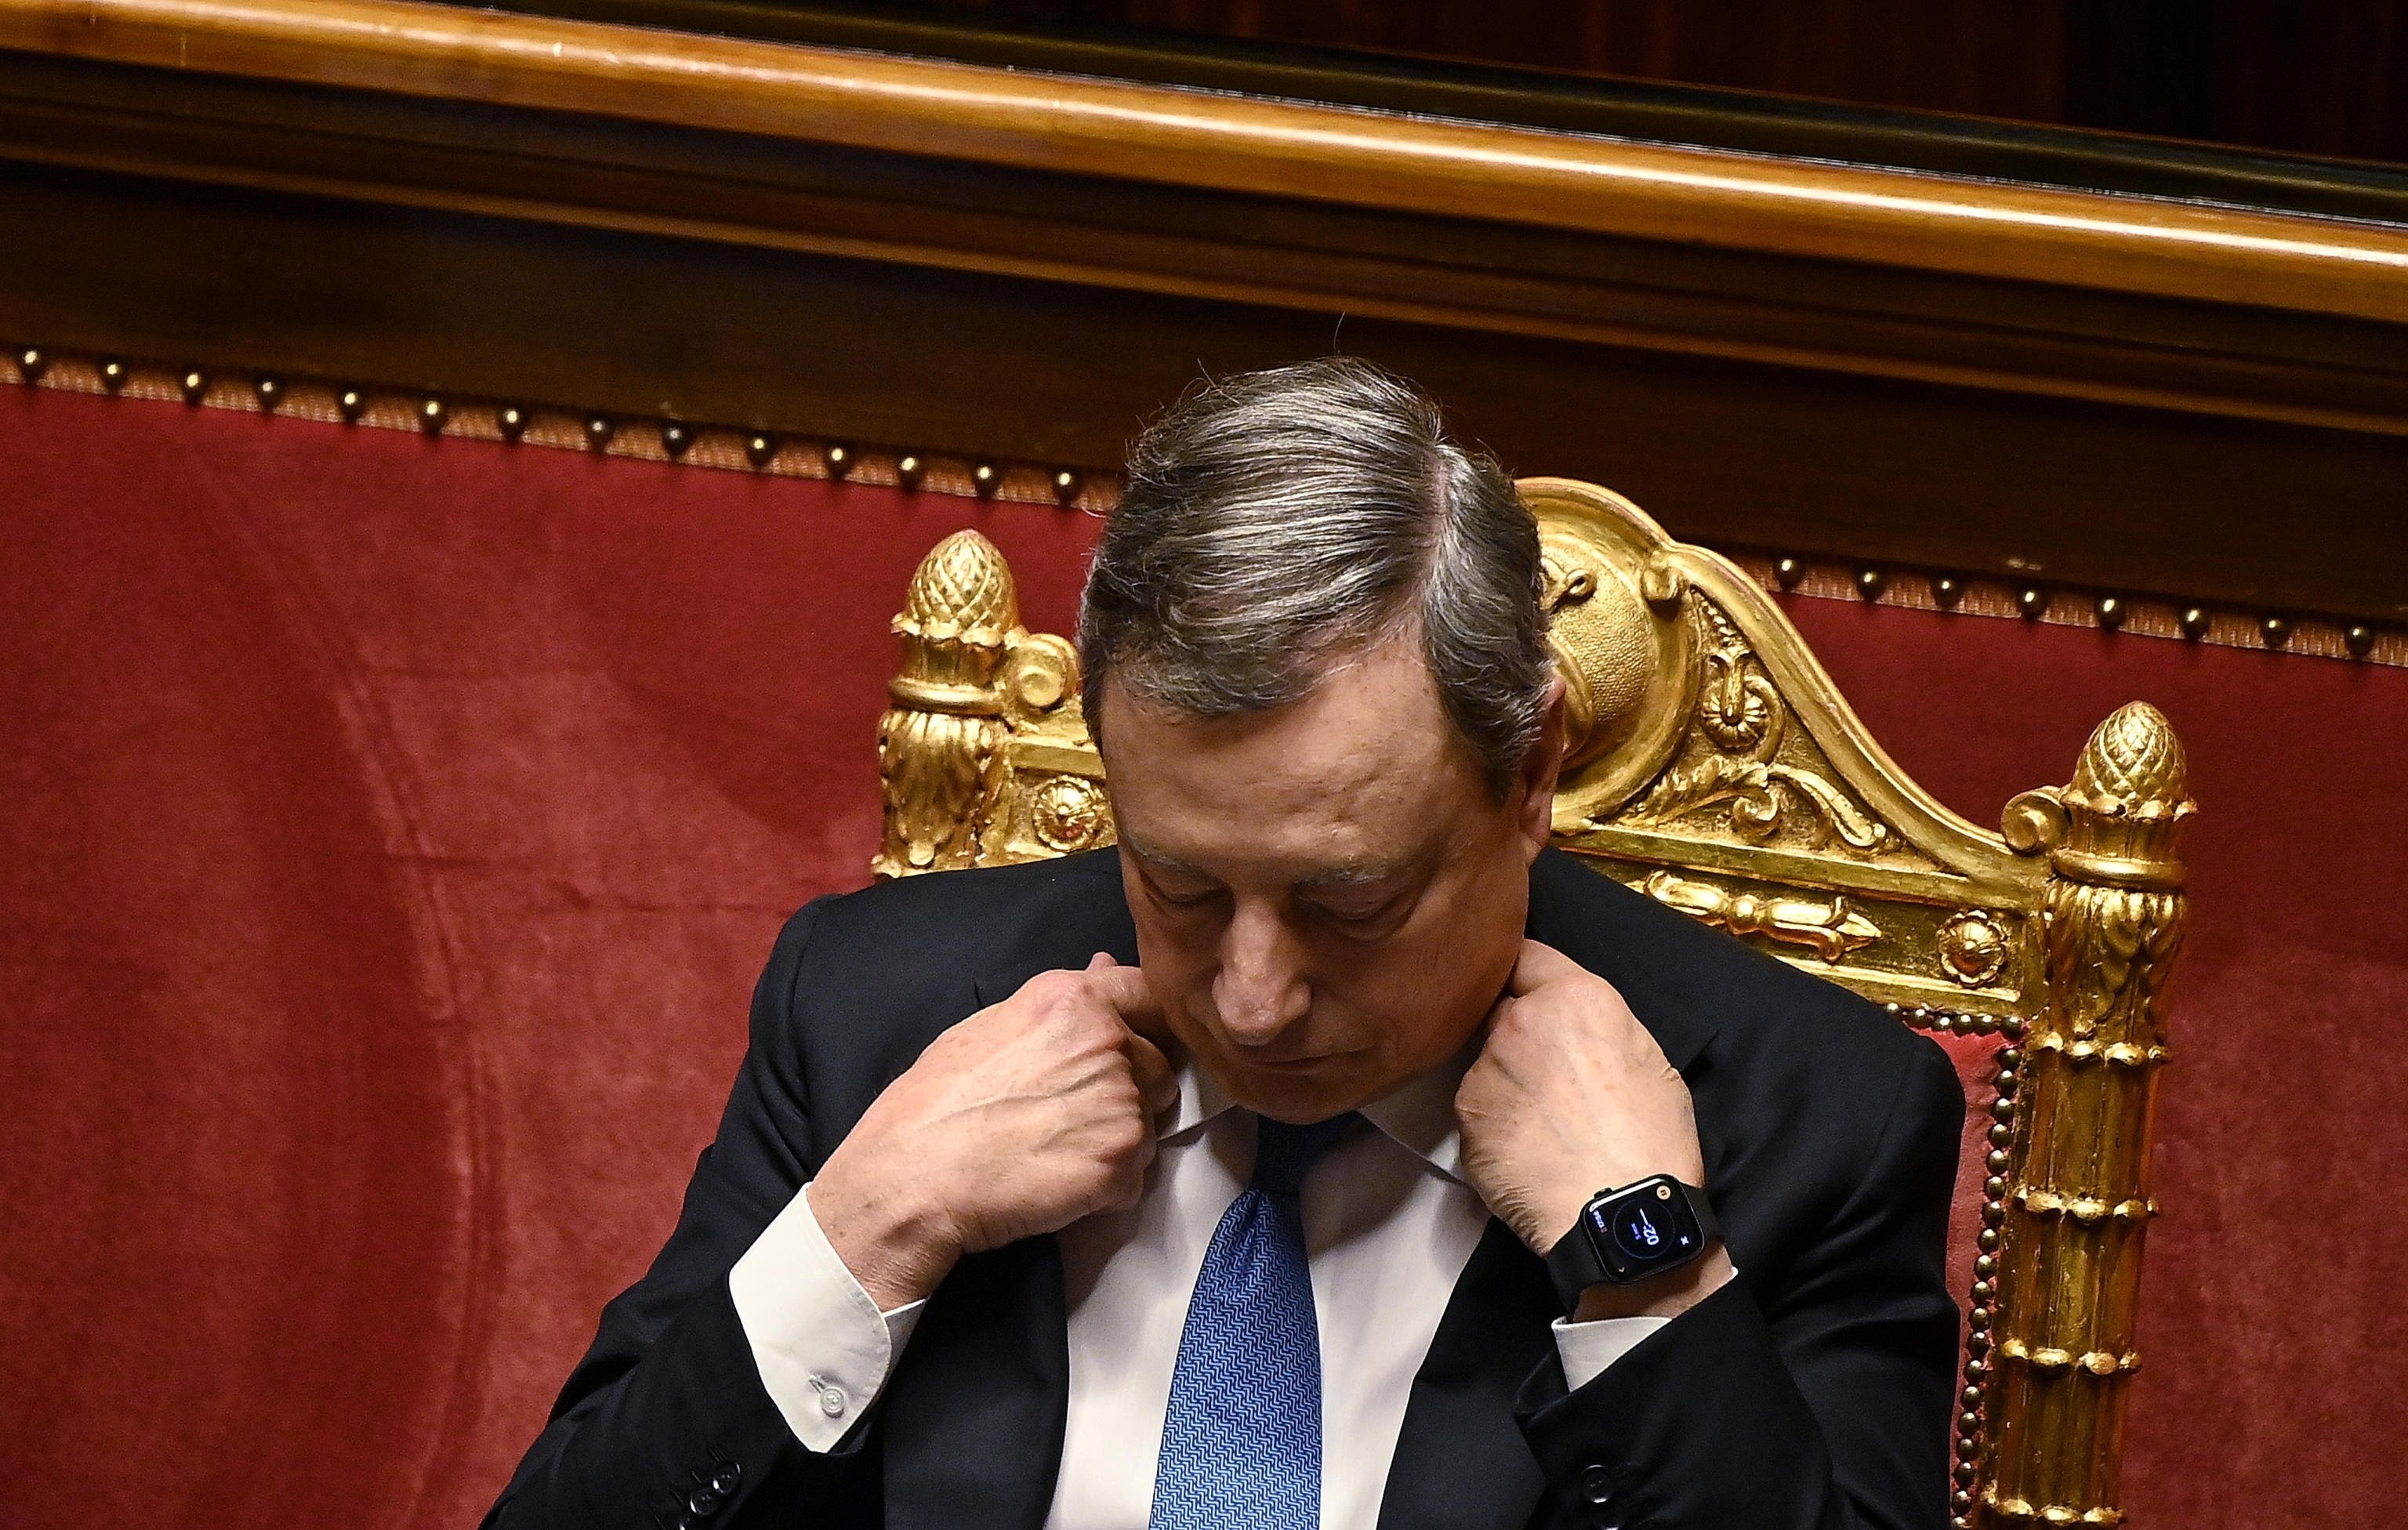 Mario Draghi dimite como primer ministro de Italia por la enésima crisis de gobierno